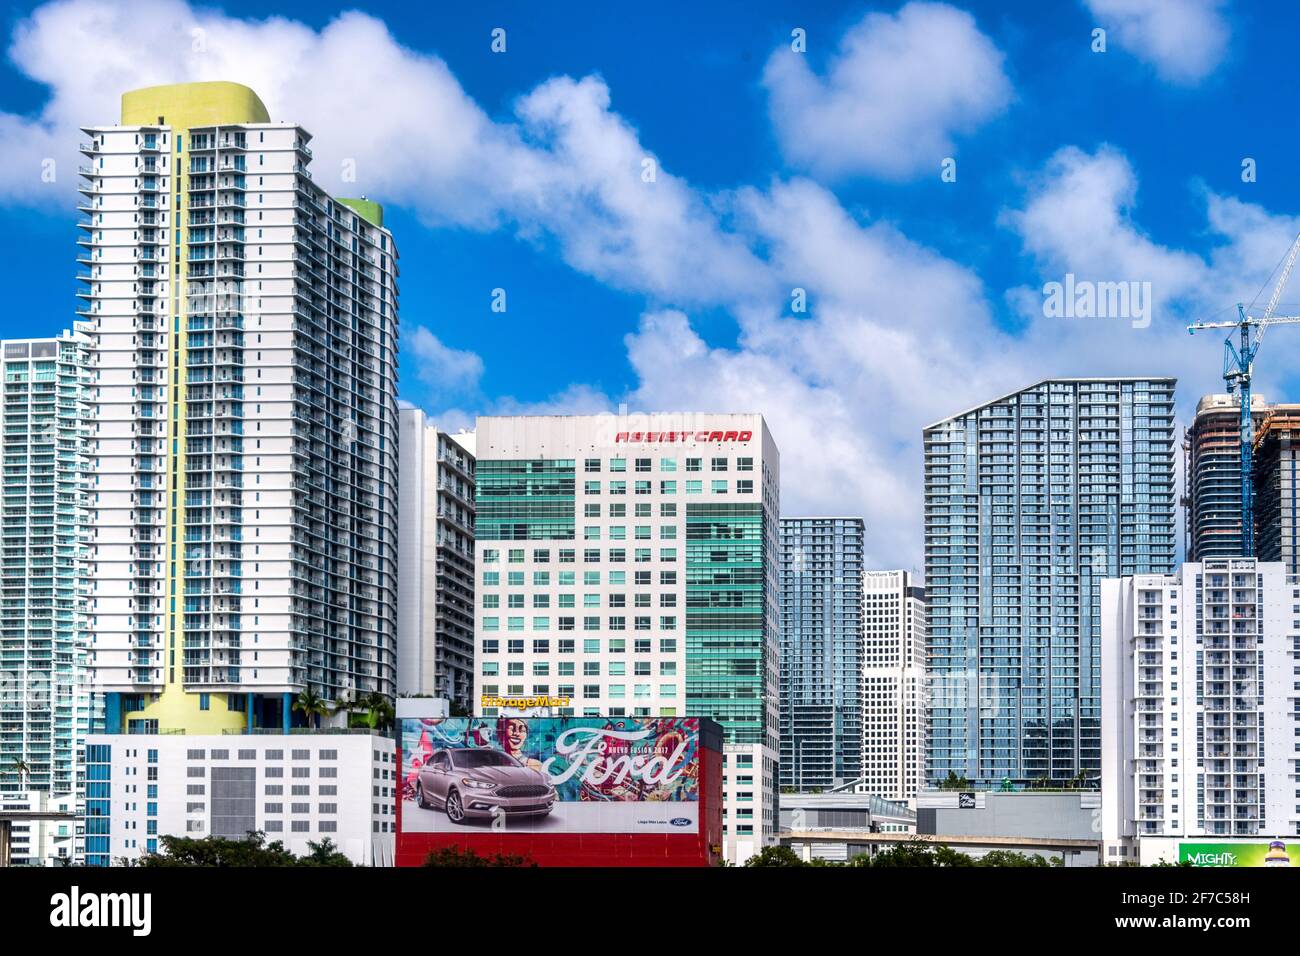 Tägliches Leben in Miami City, Florida, USA Stockfoto